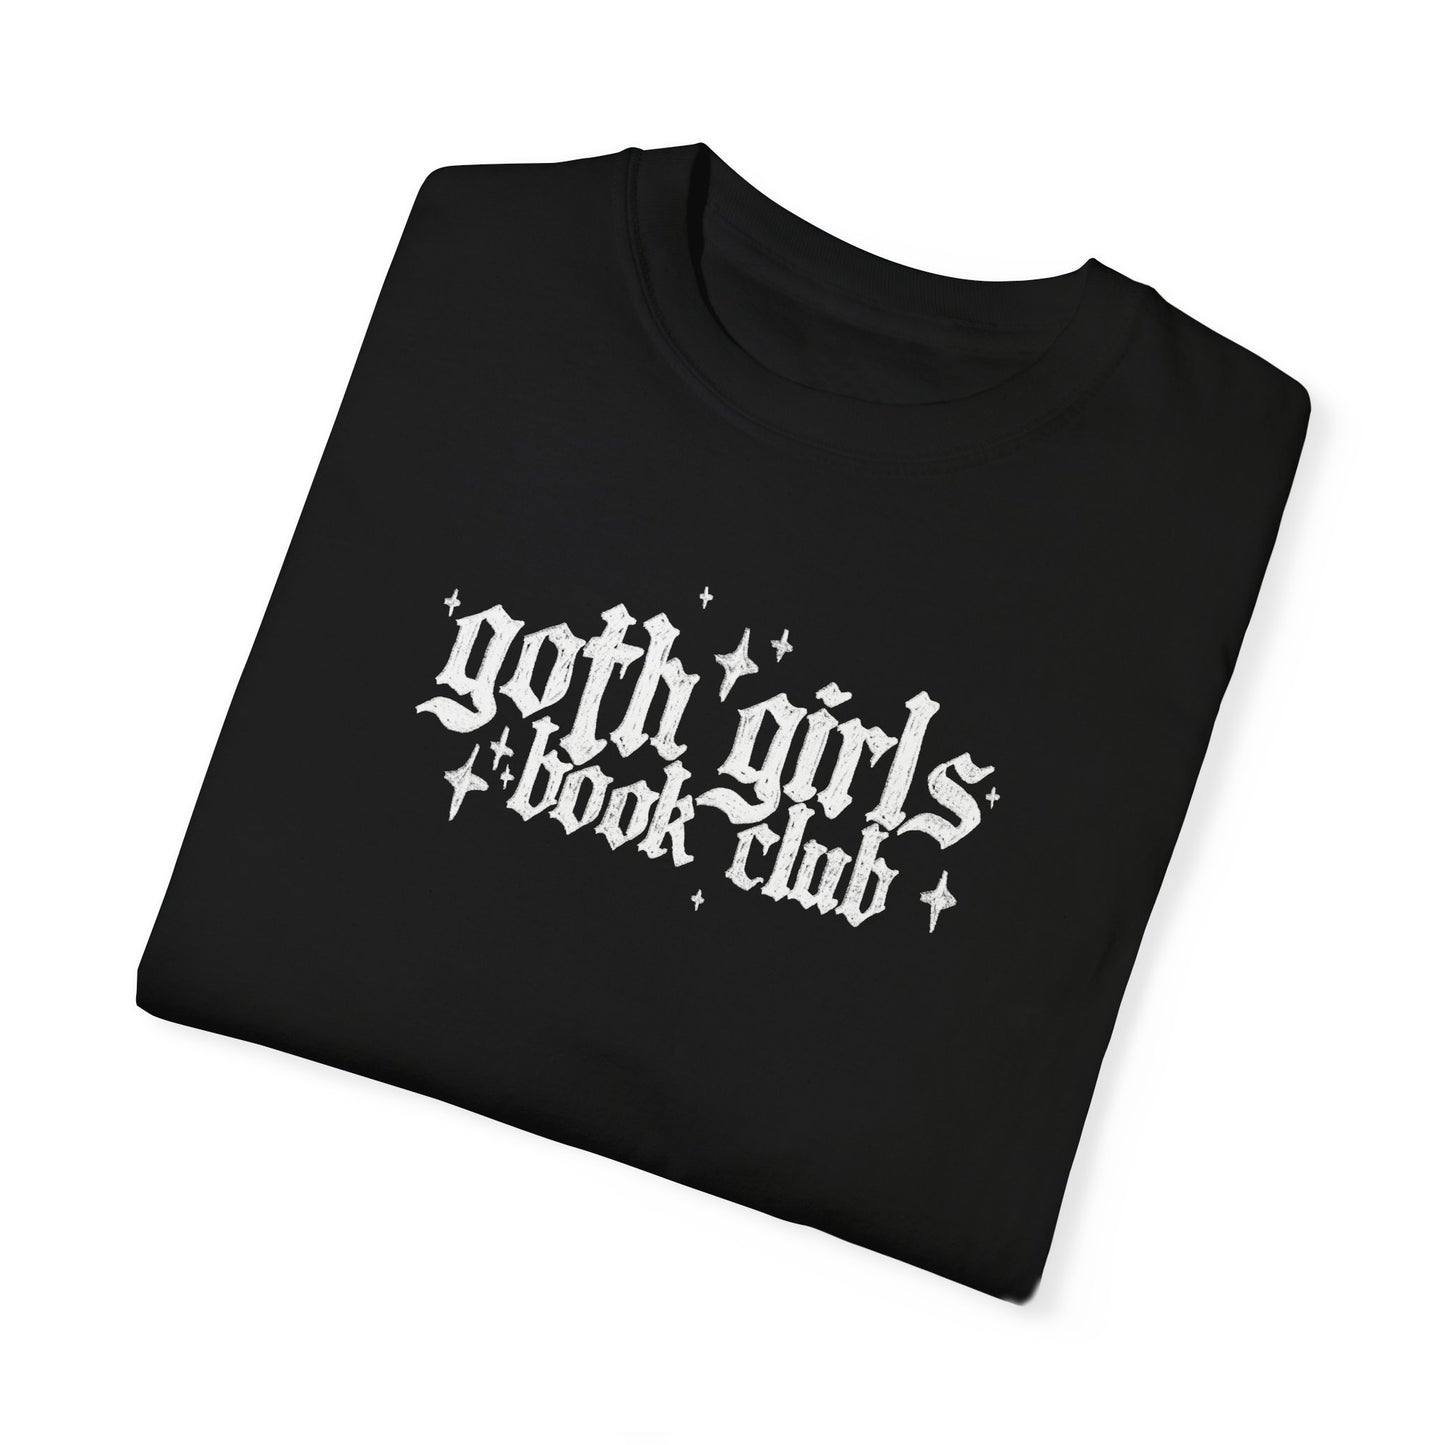 Goth Girls Book Club Vintage Tee